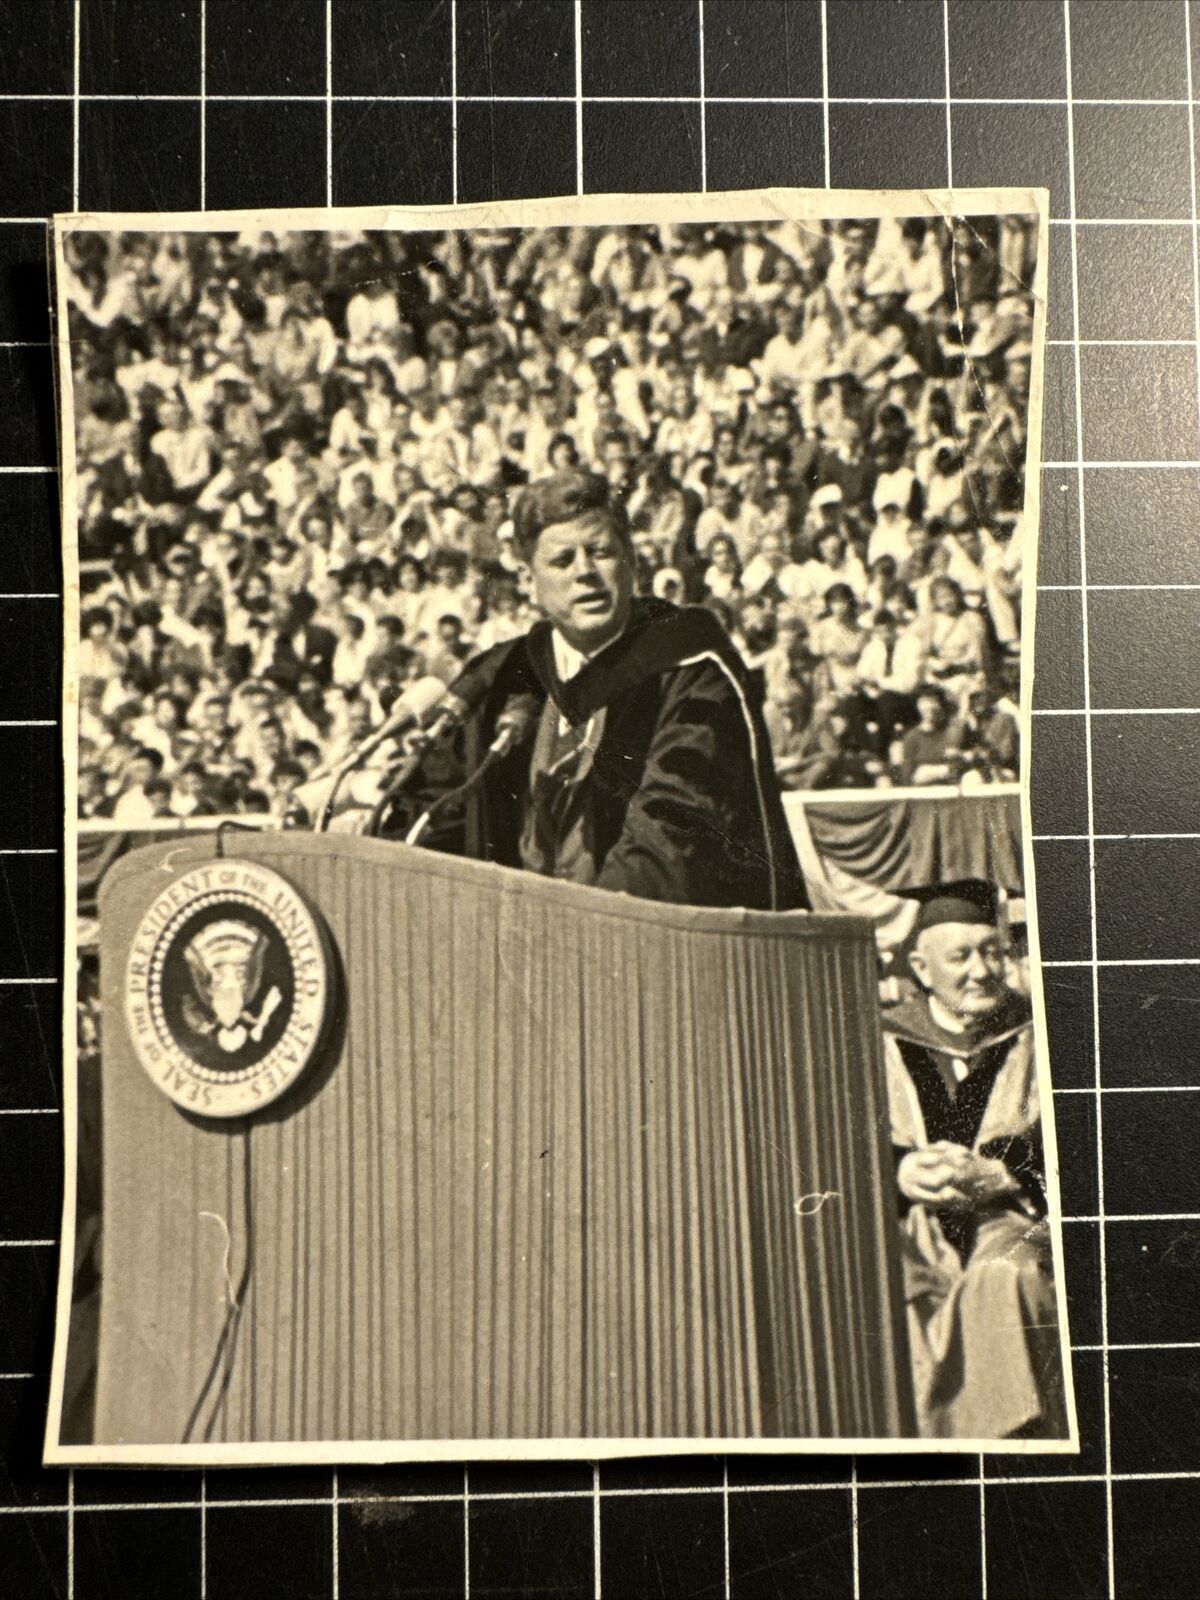 John F Kennedy Charter Day Speech UC BERKELEY 3/23/62 - Estate Sale Found Photo